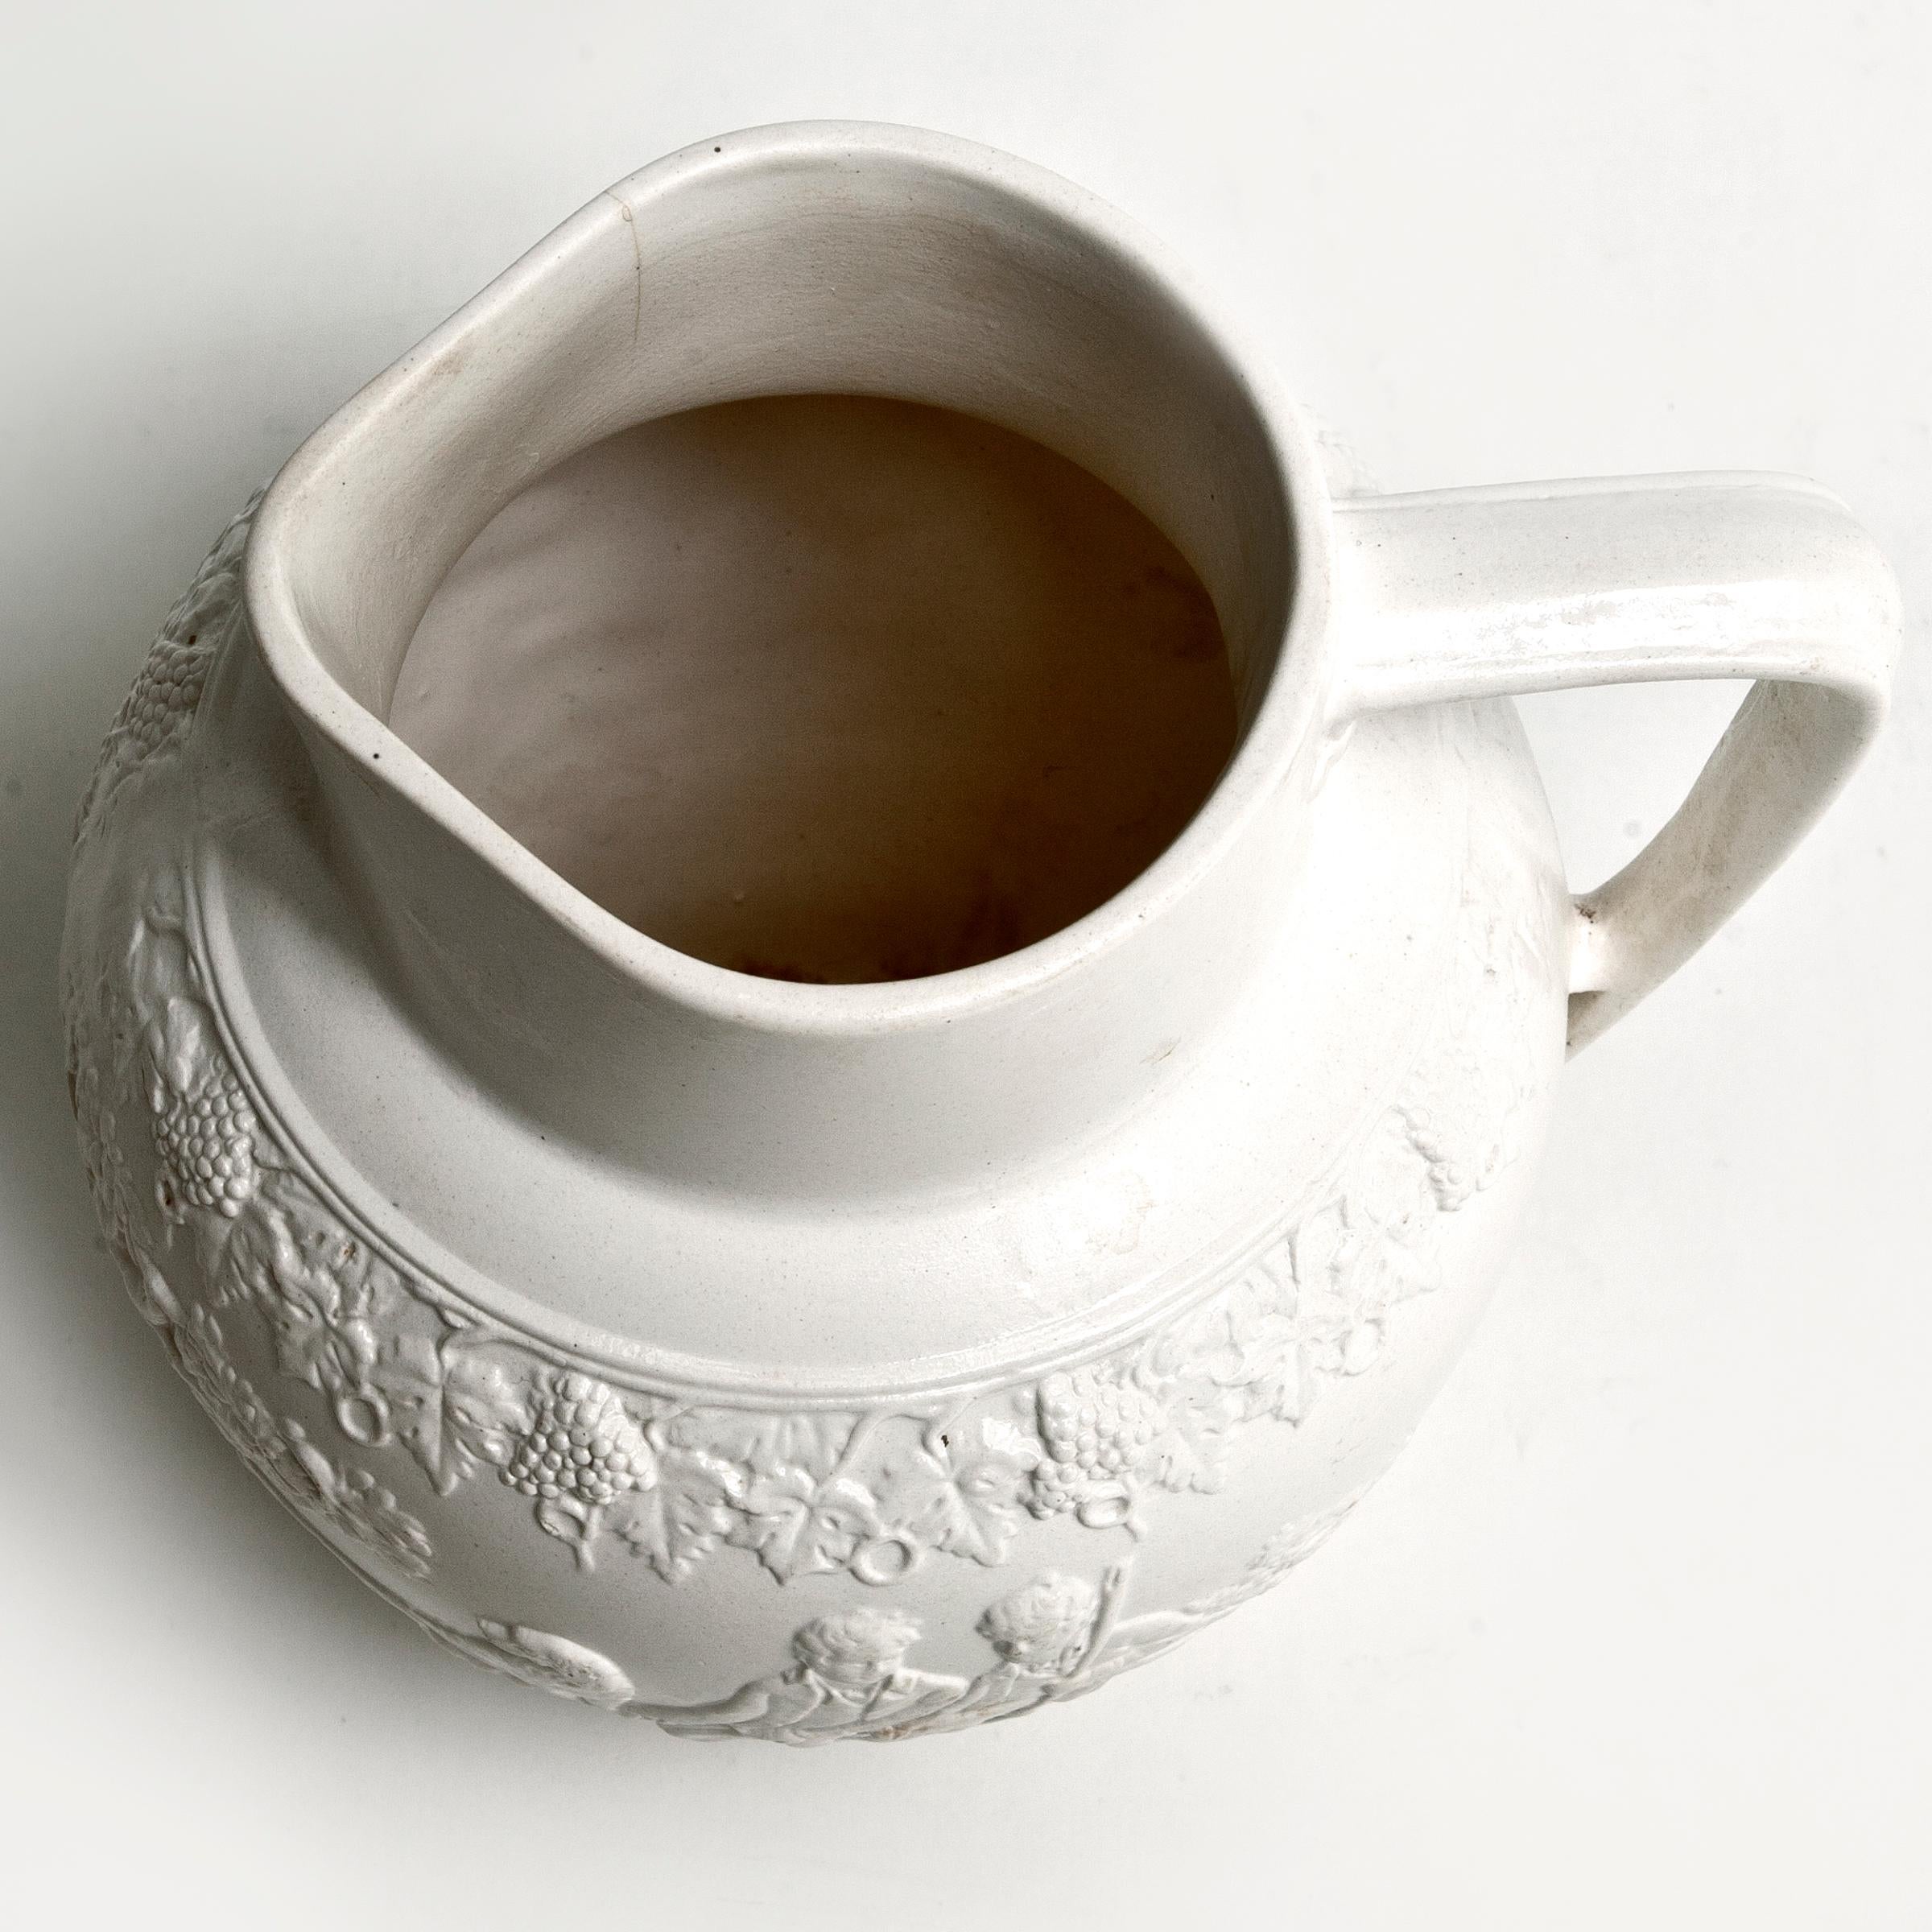 Rare antique salt-glazed stoneware pitcher with hunting scene. Slight discoloration around the base.